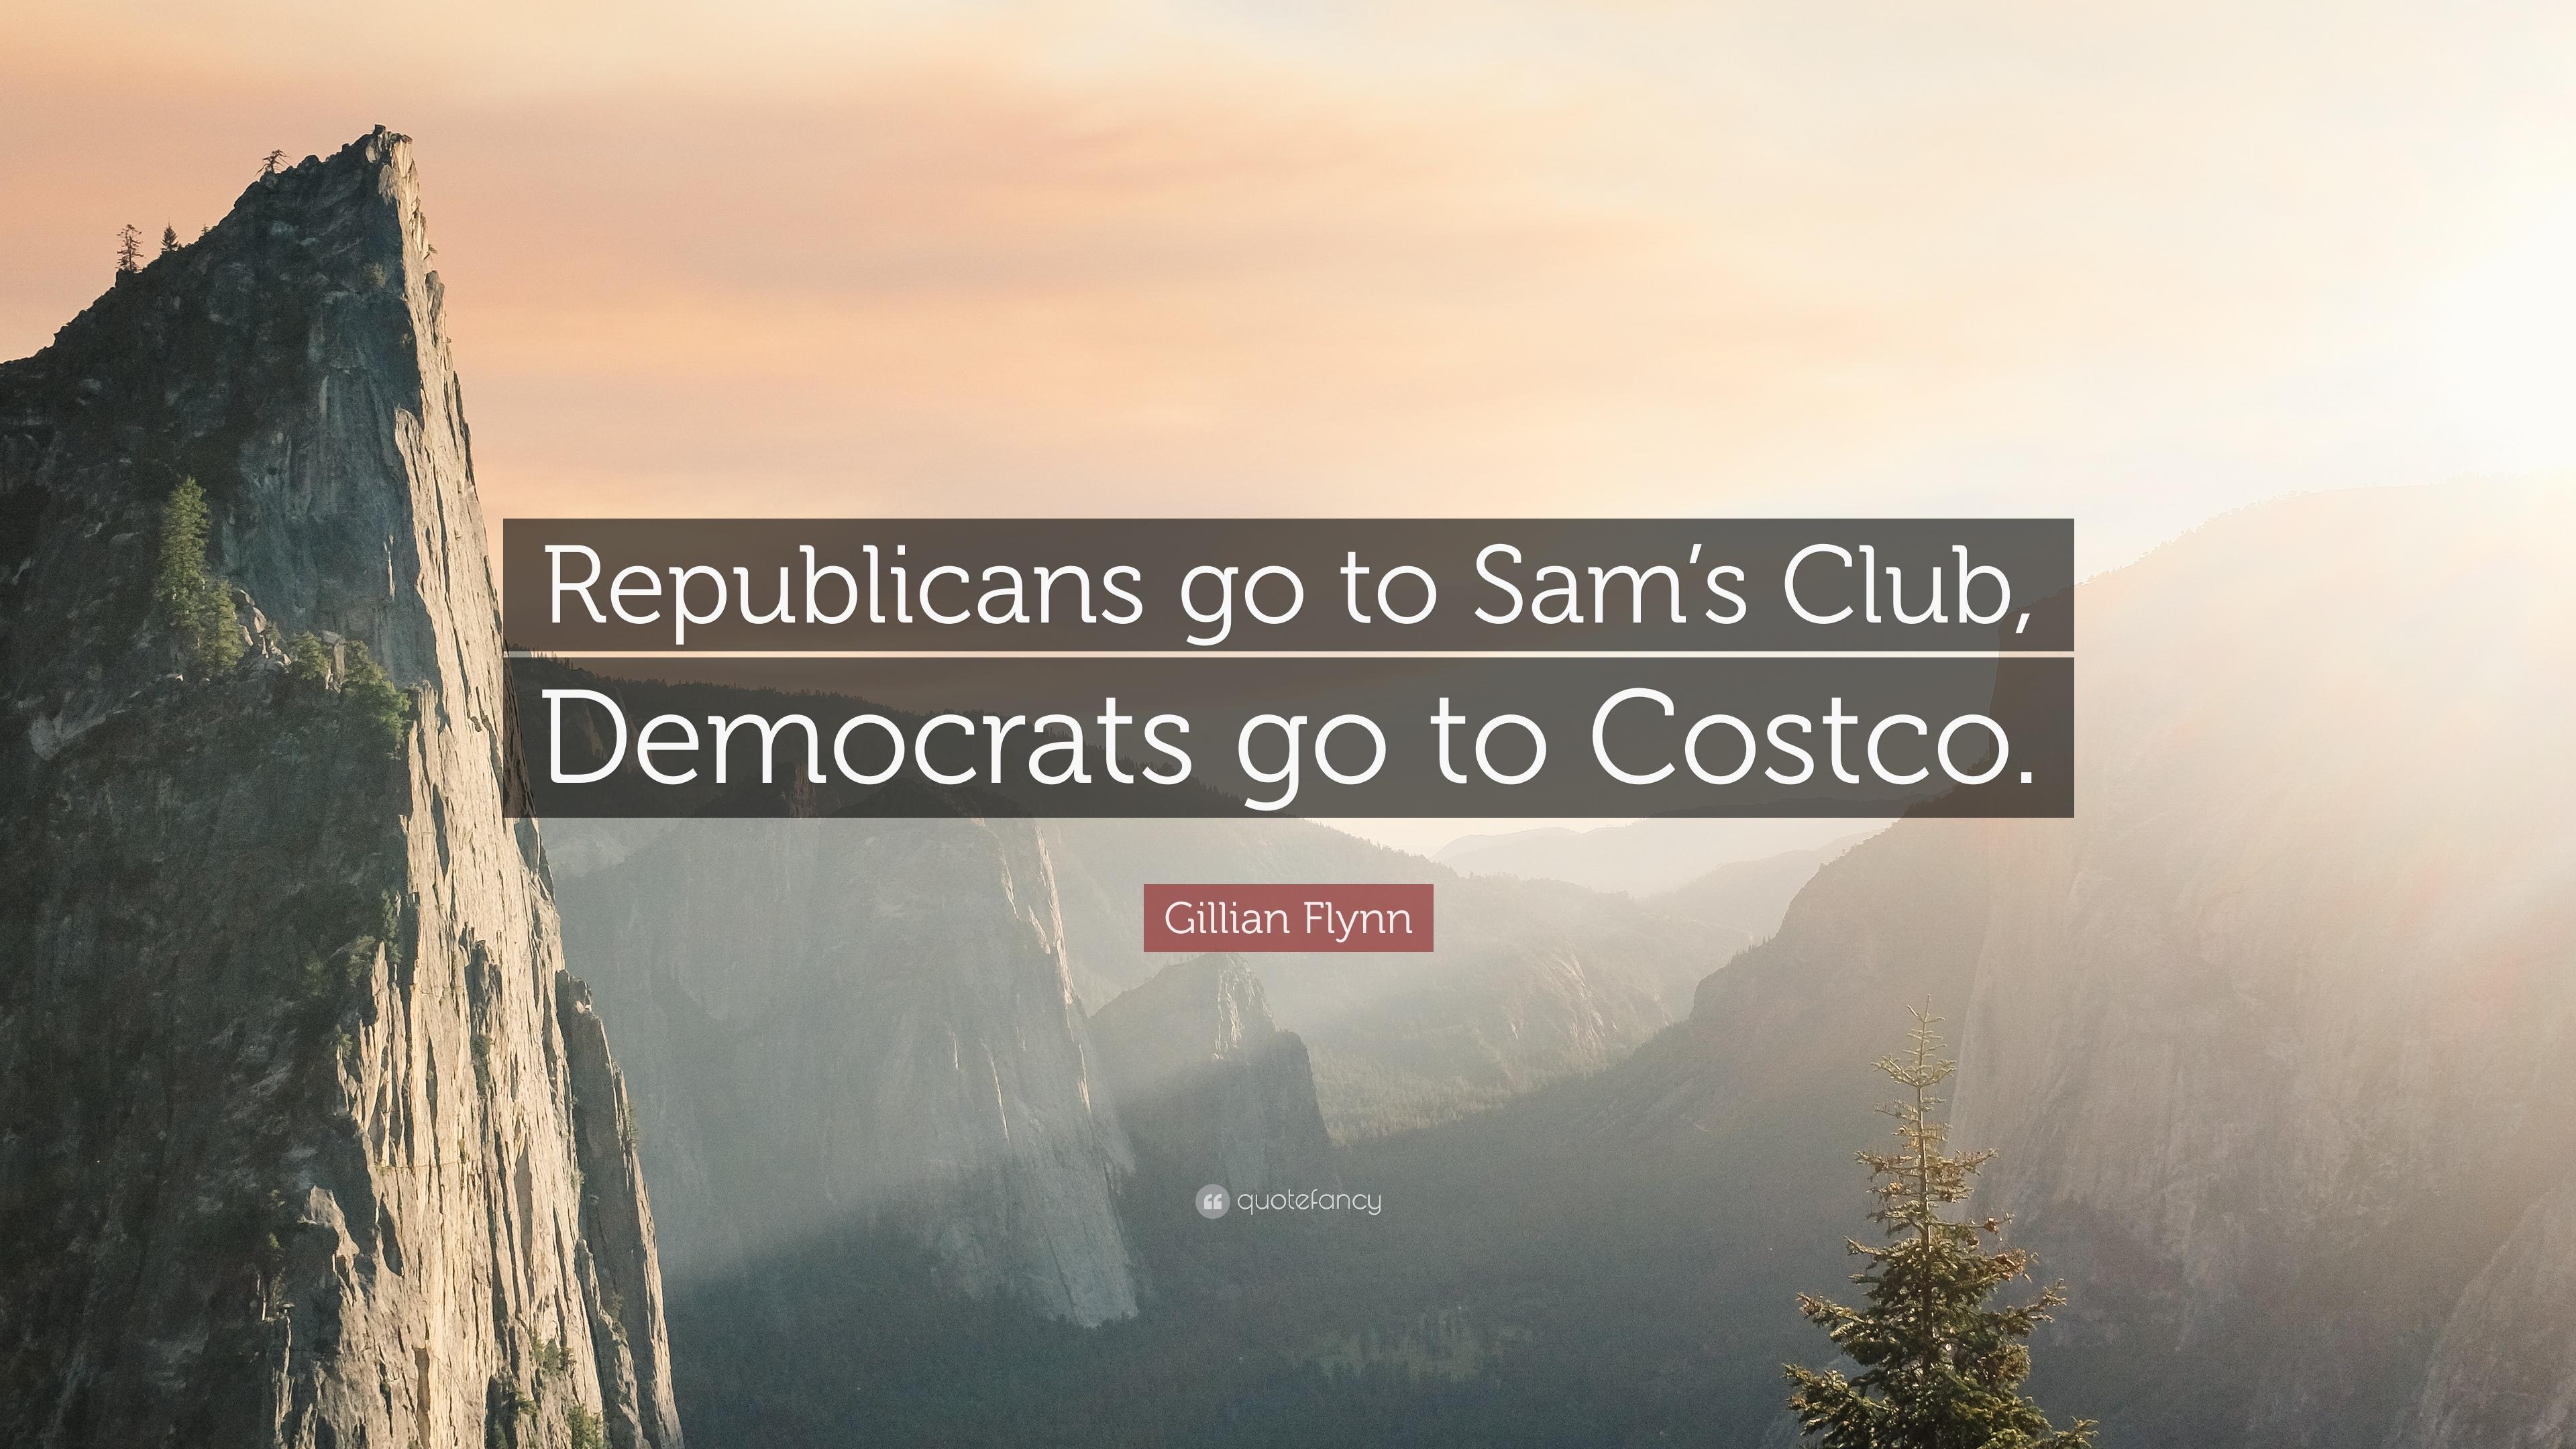 Gillian Flynn Quote: “Republicans go to Sam's Club